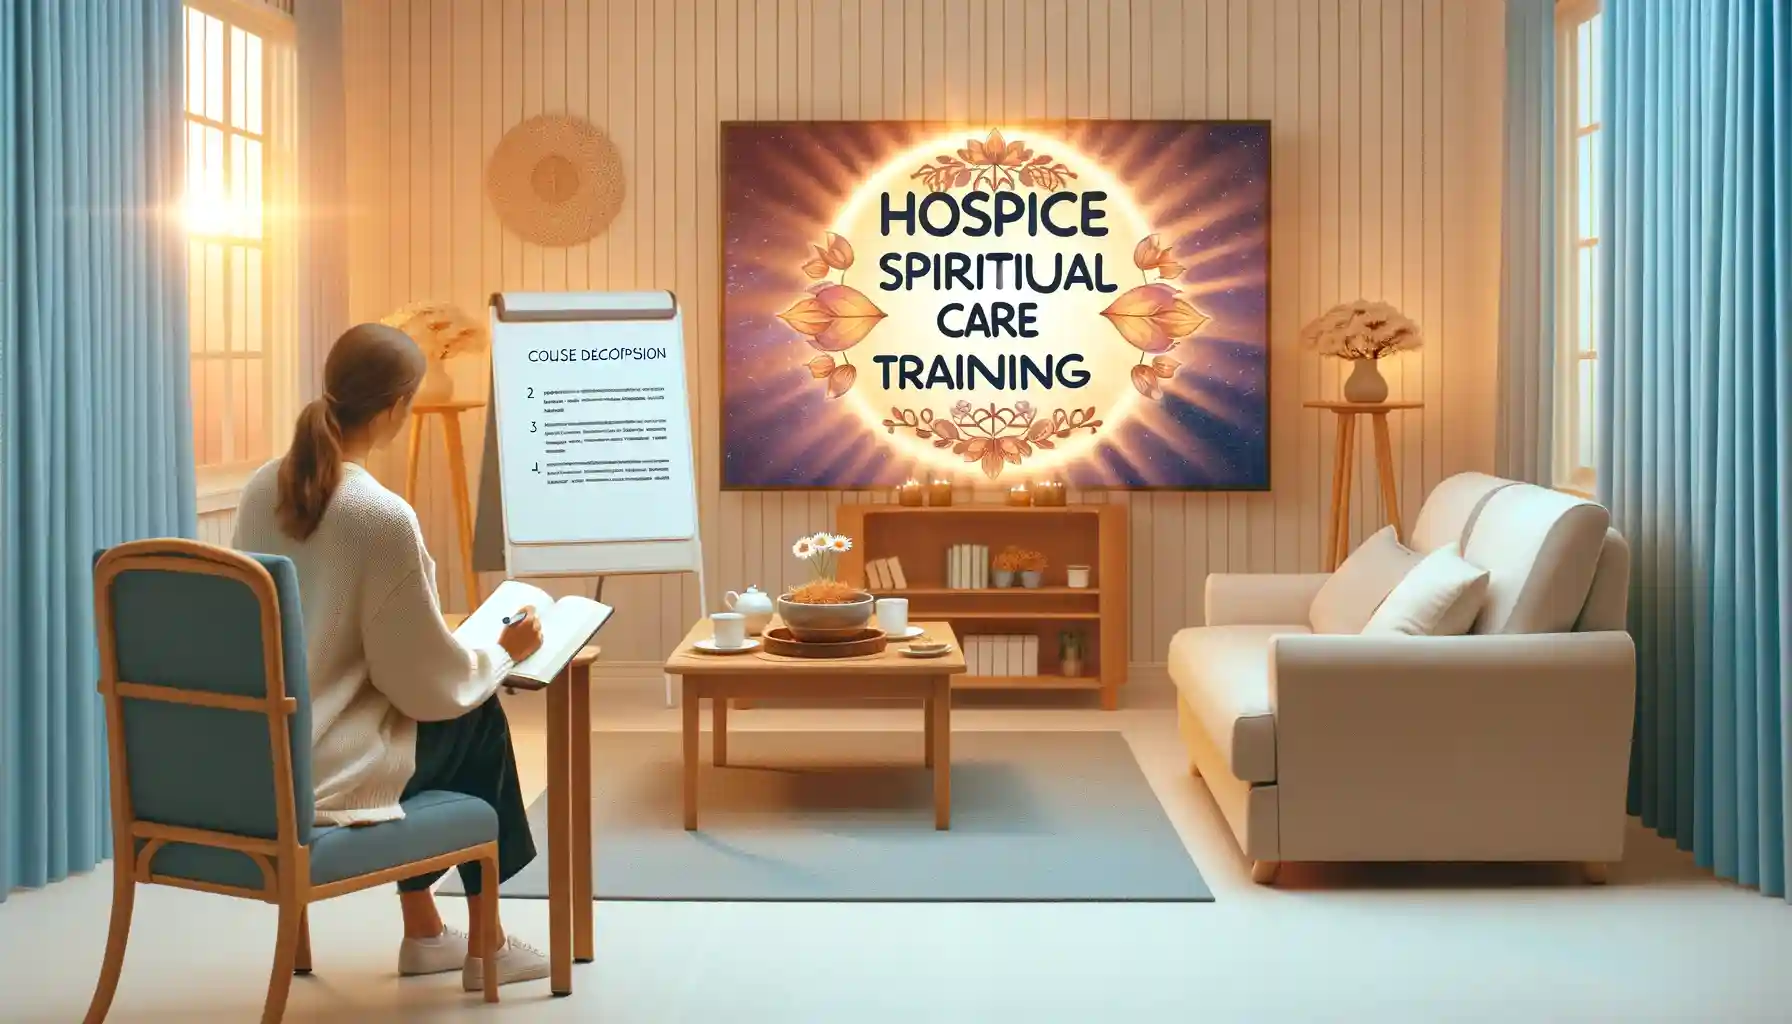 Hospice Spiritual Care Training Course Description
